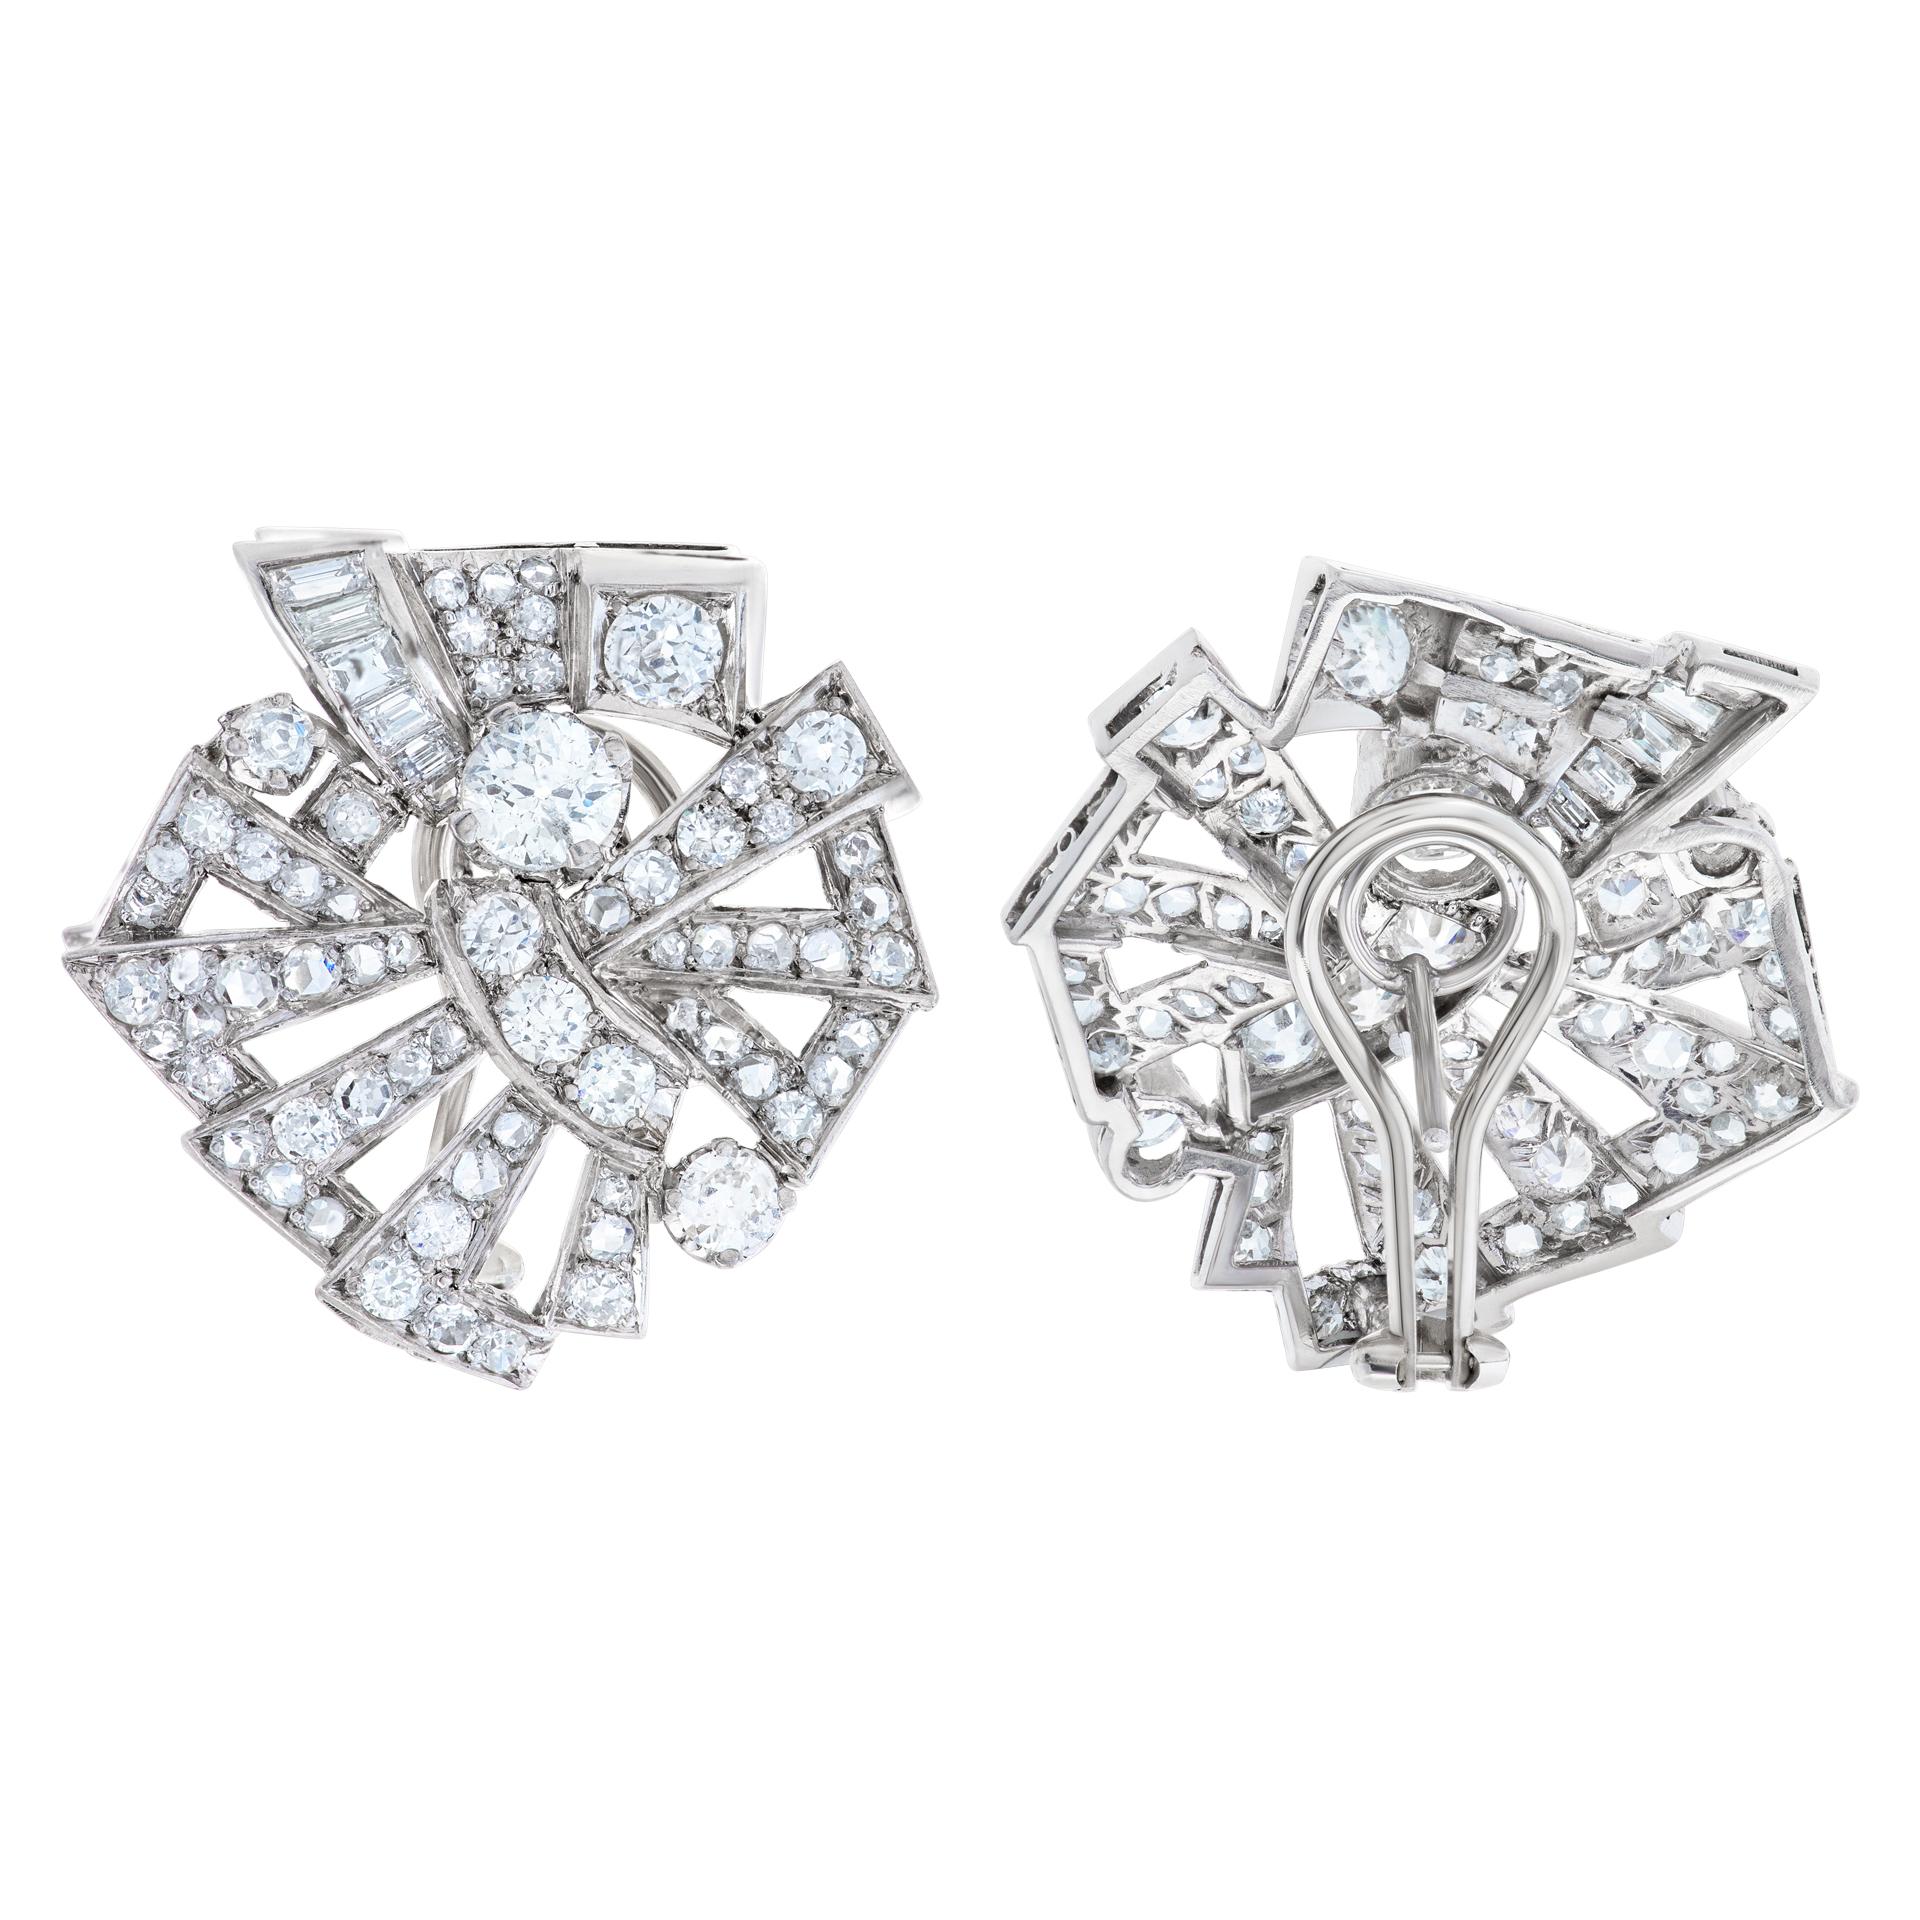 Women's Art Deco Diamond Earrings in Platinum